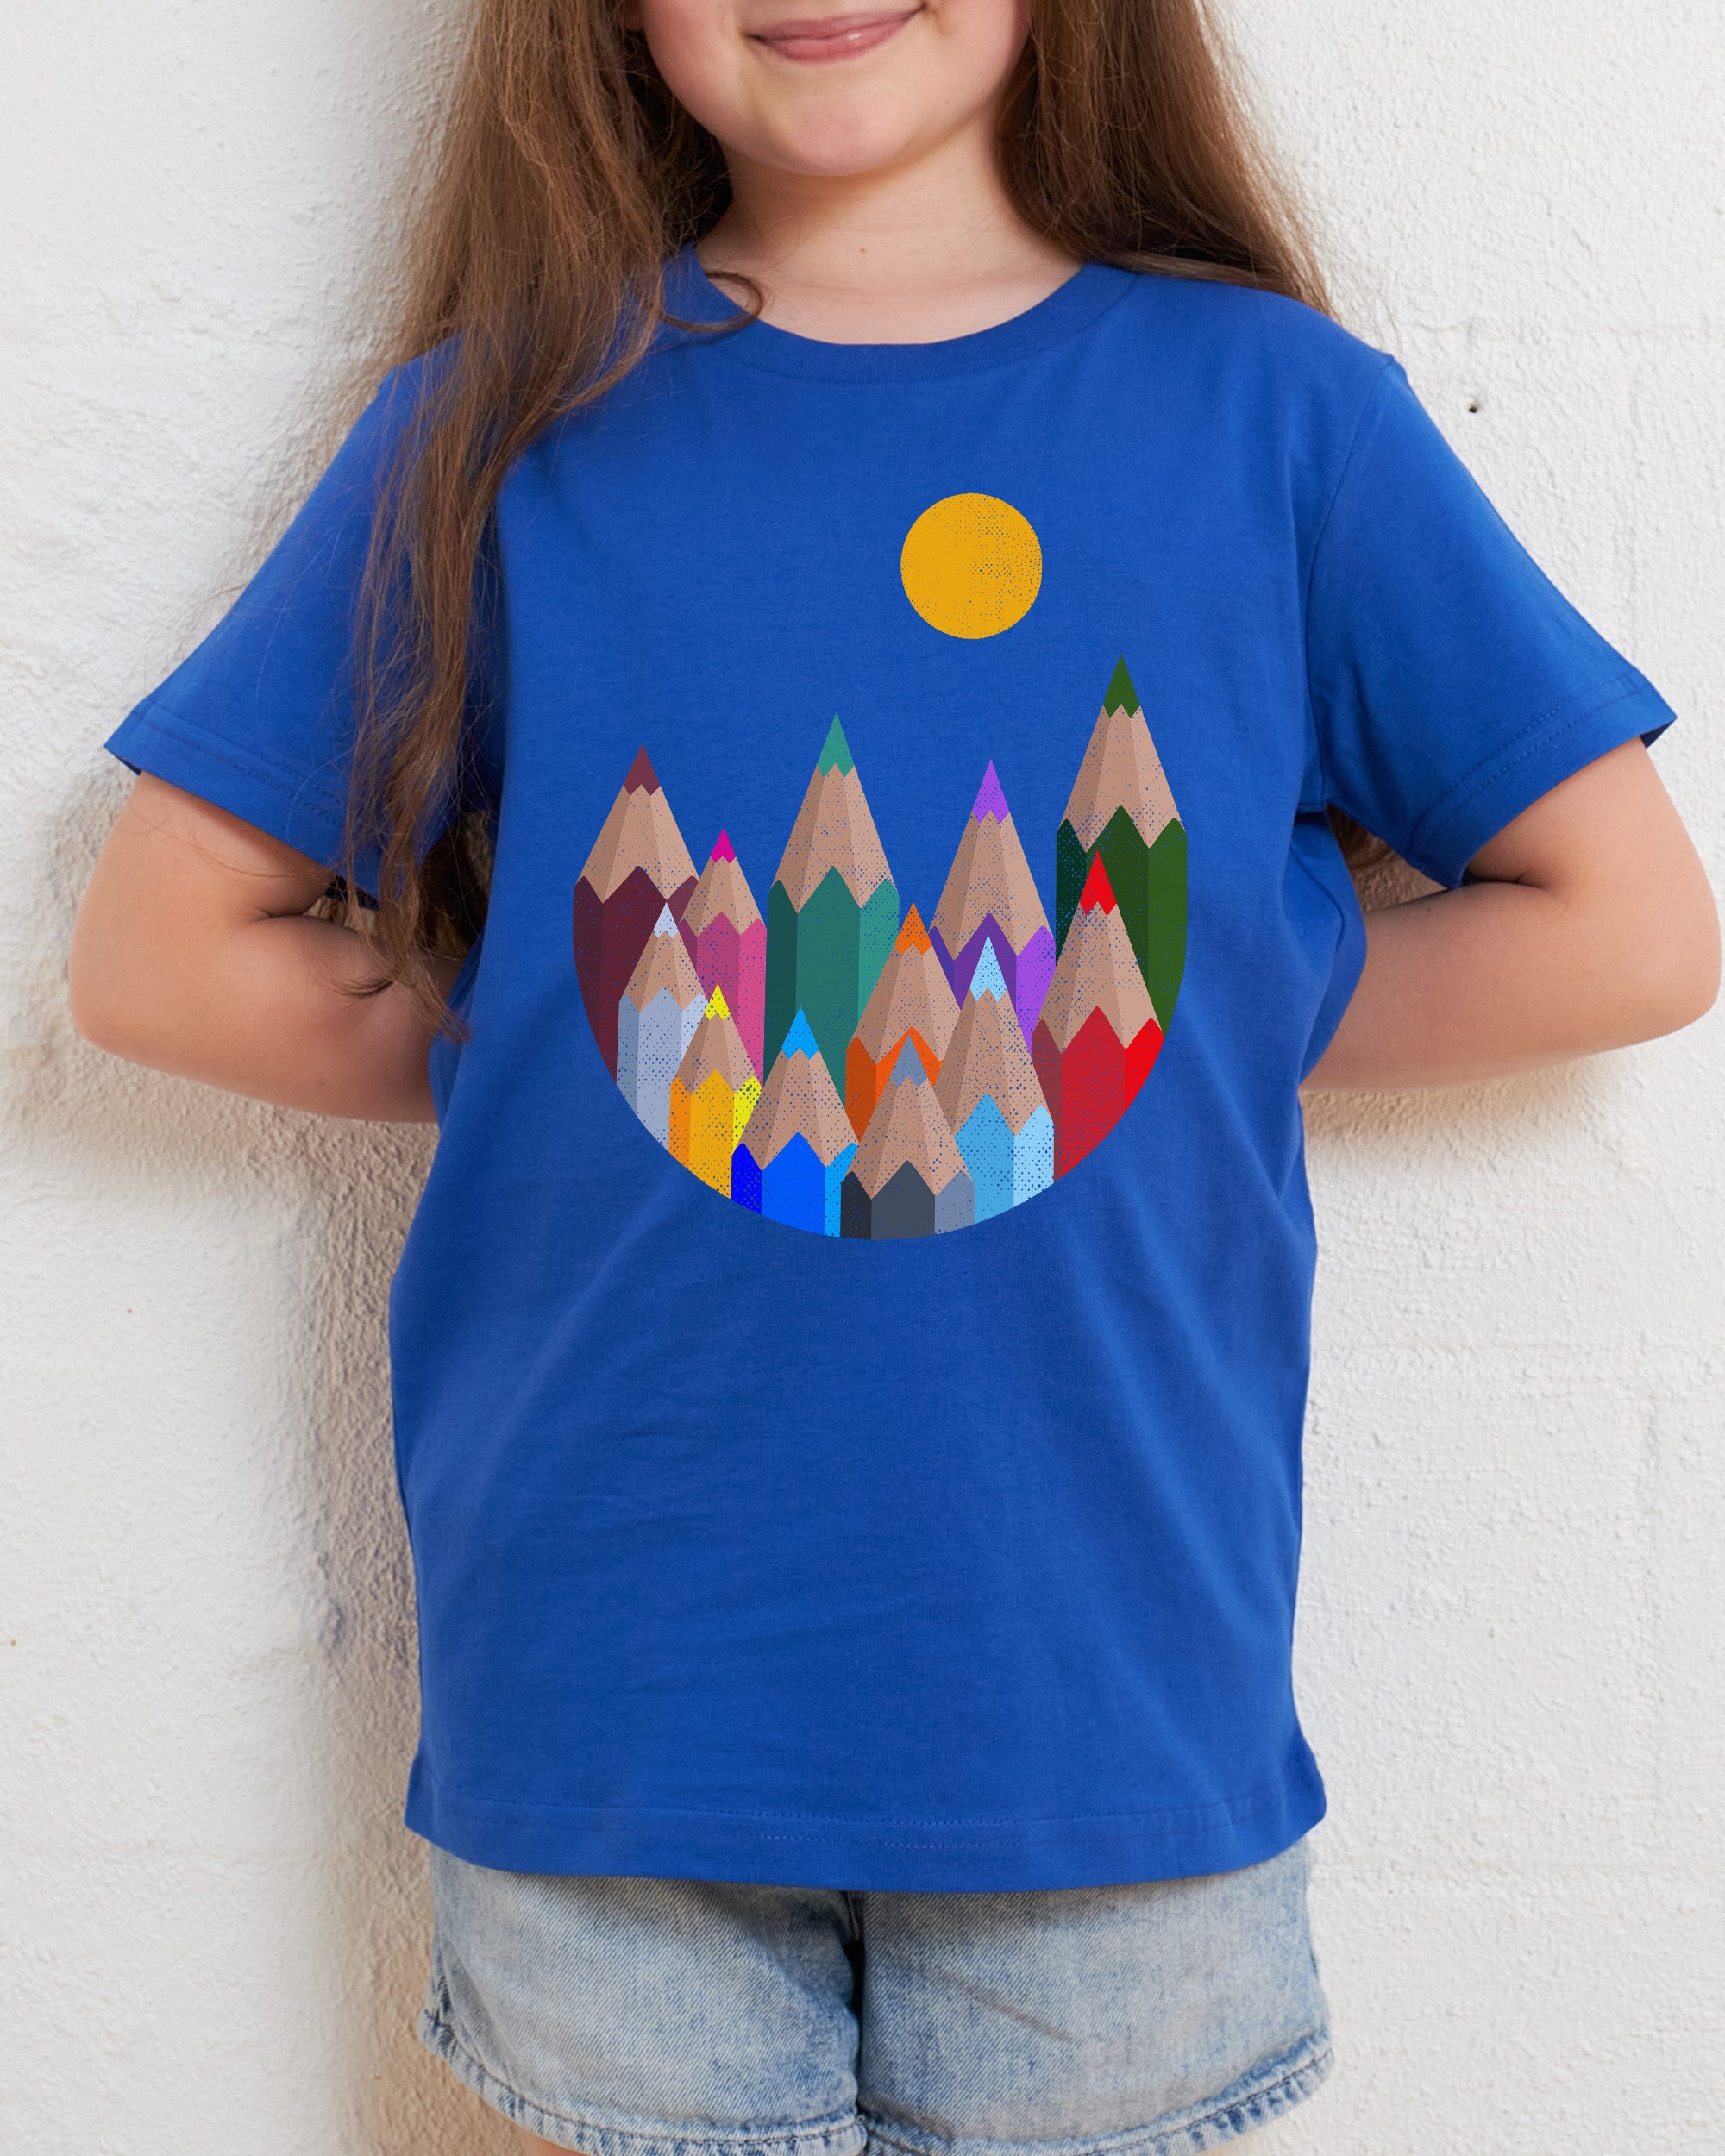 12 Colour Mountains Kids T-Shirt